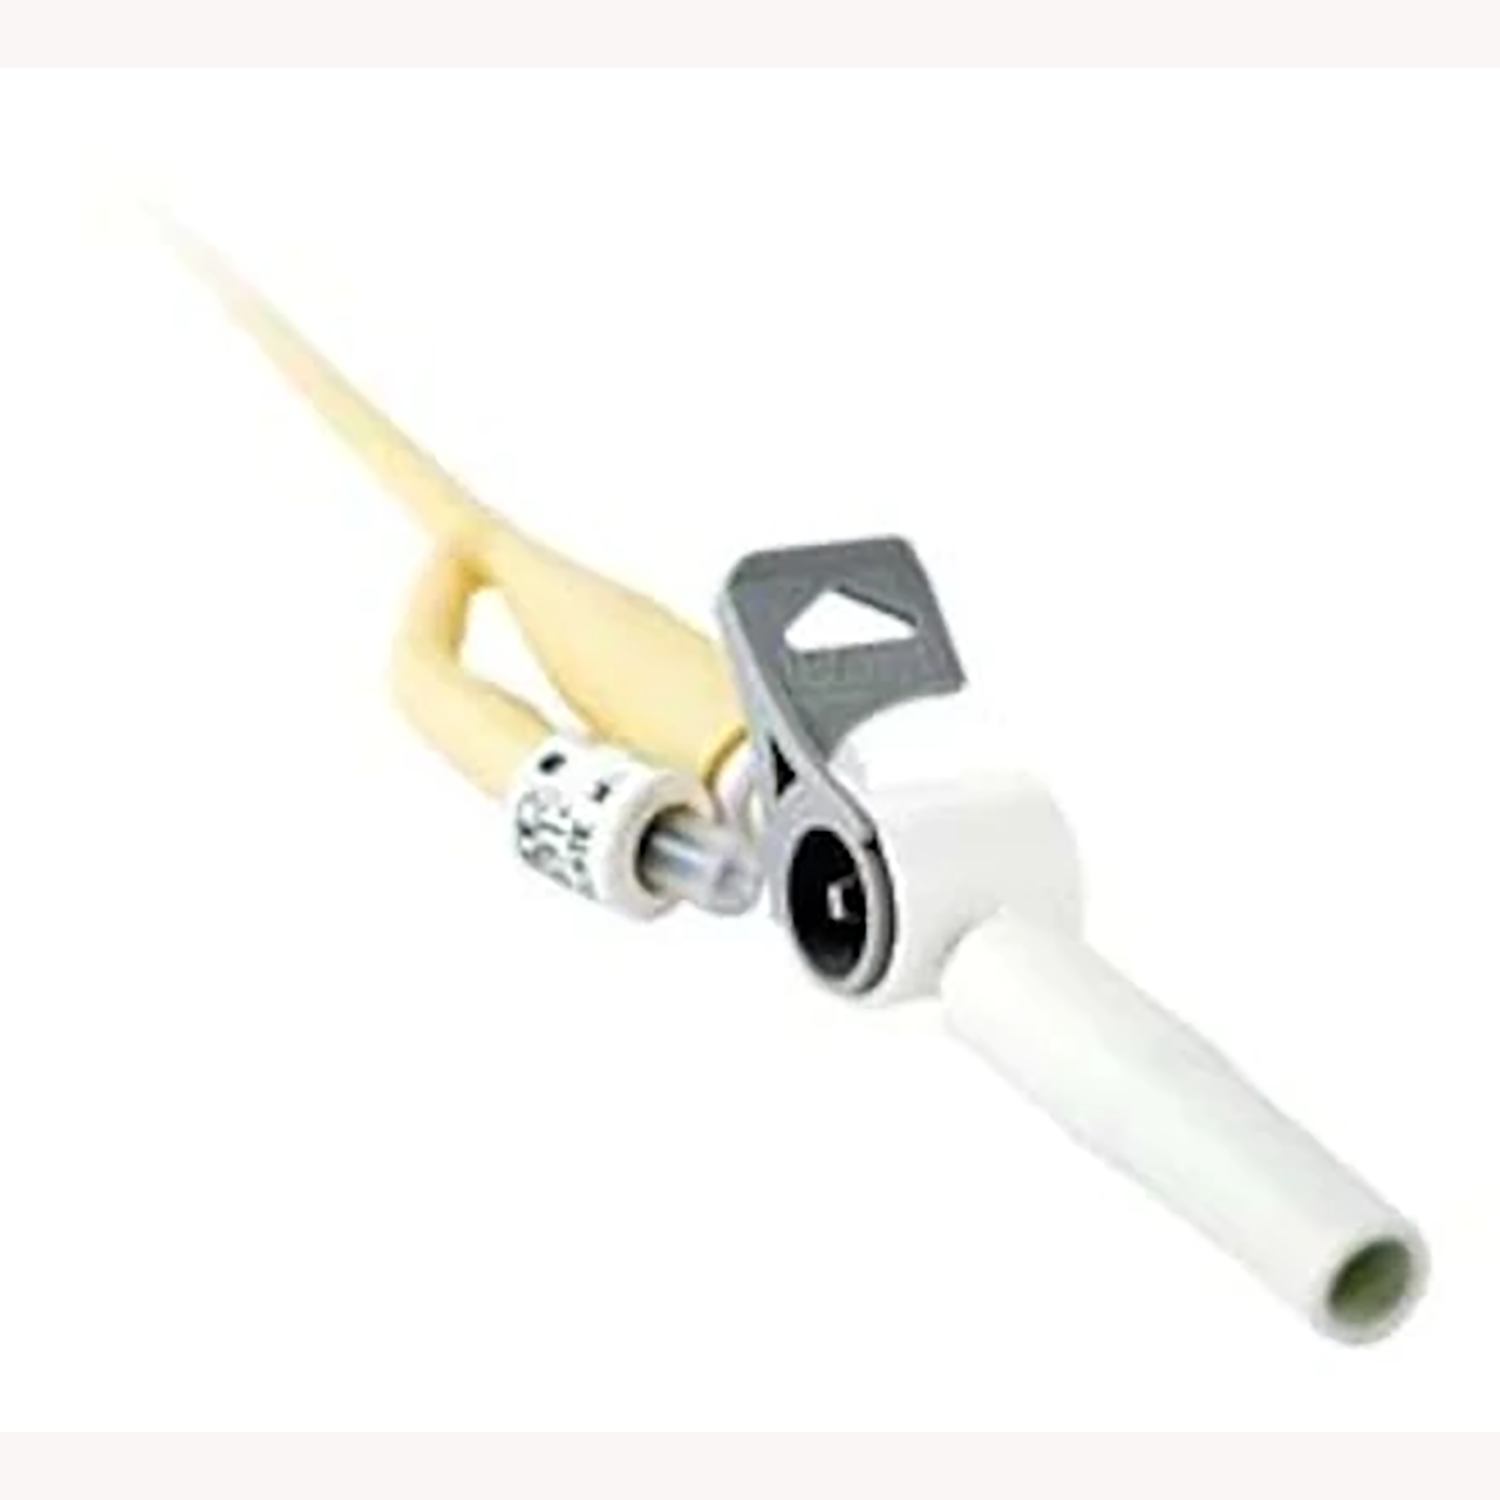 Flip-Flo Foley Catheters Valve | 180° Lever Tap | Pack of 5